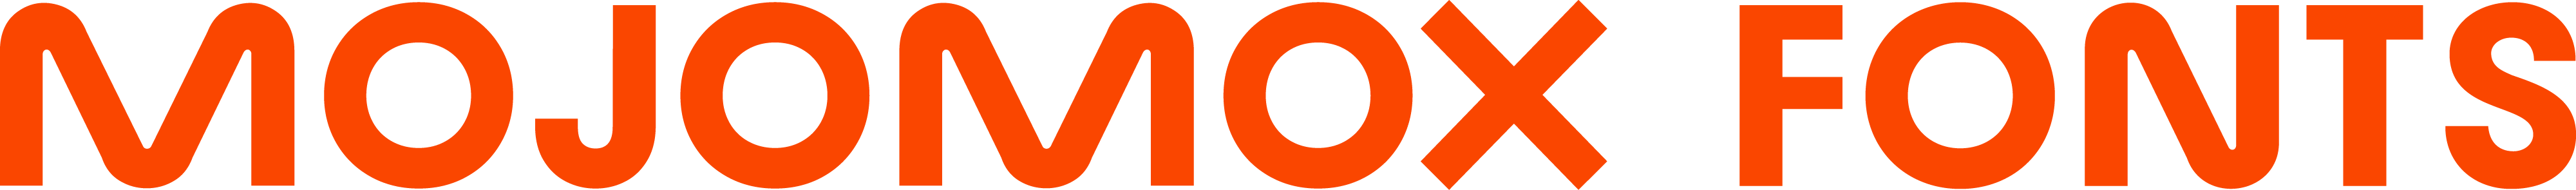 Mojomox Fonts Logo